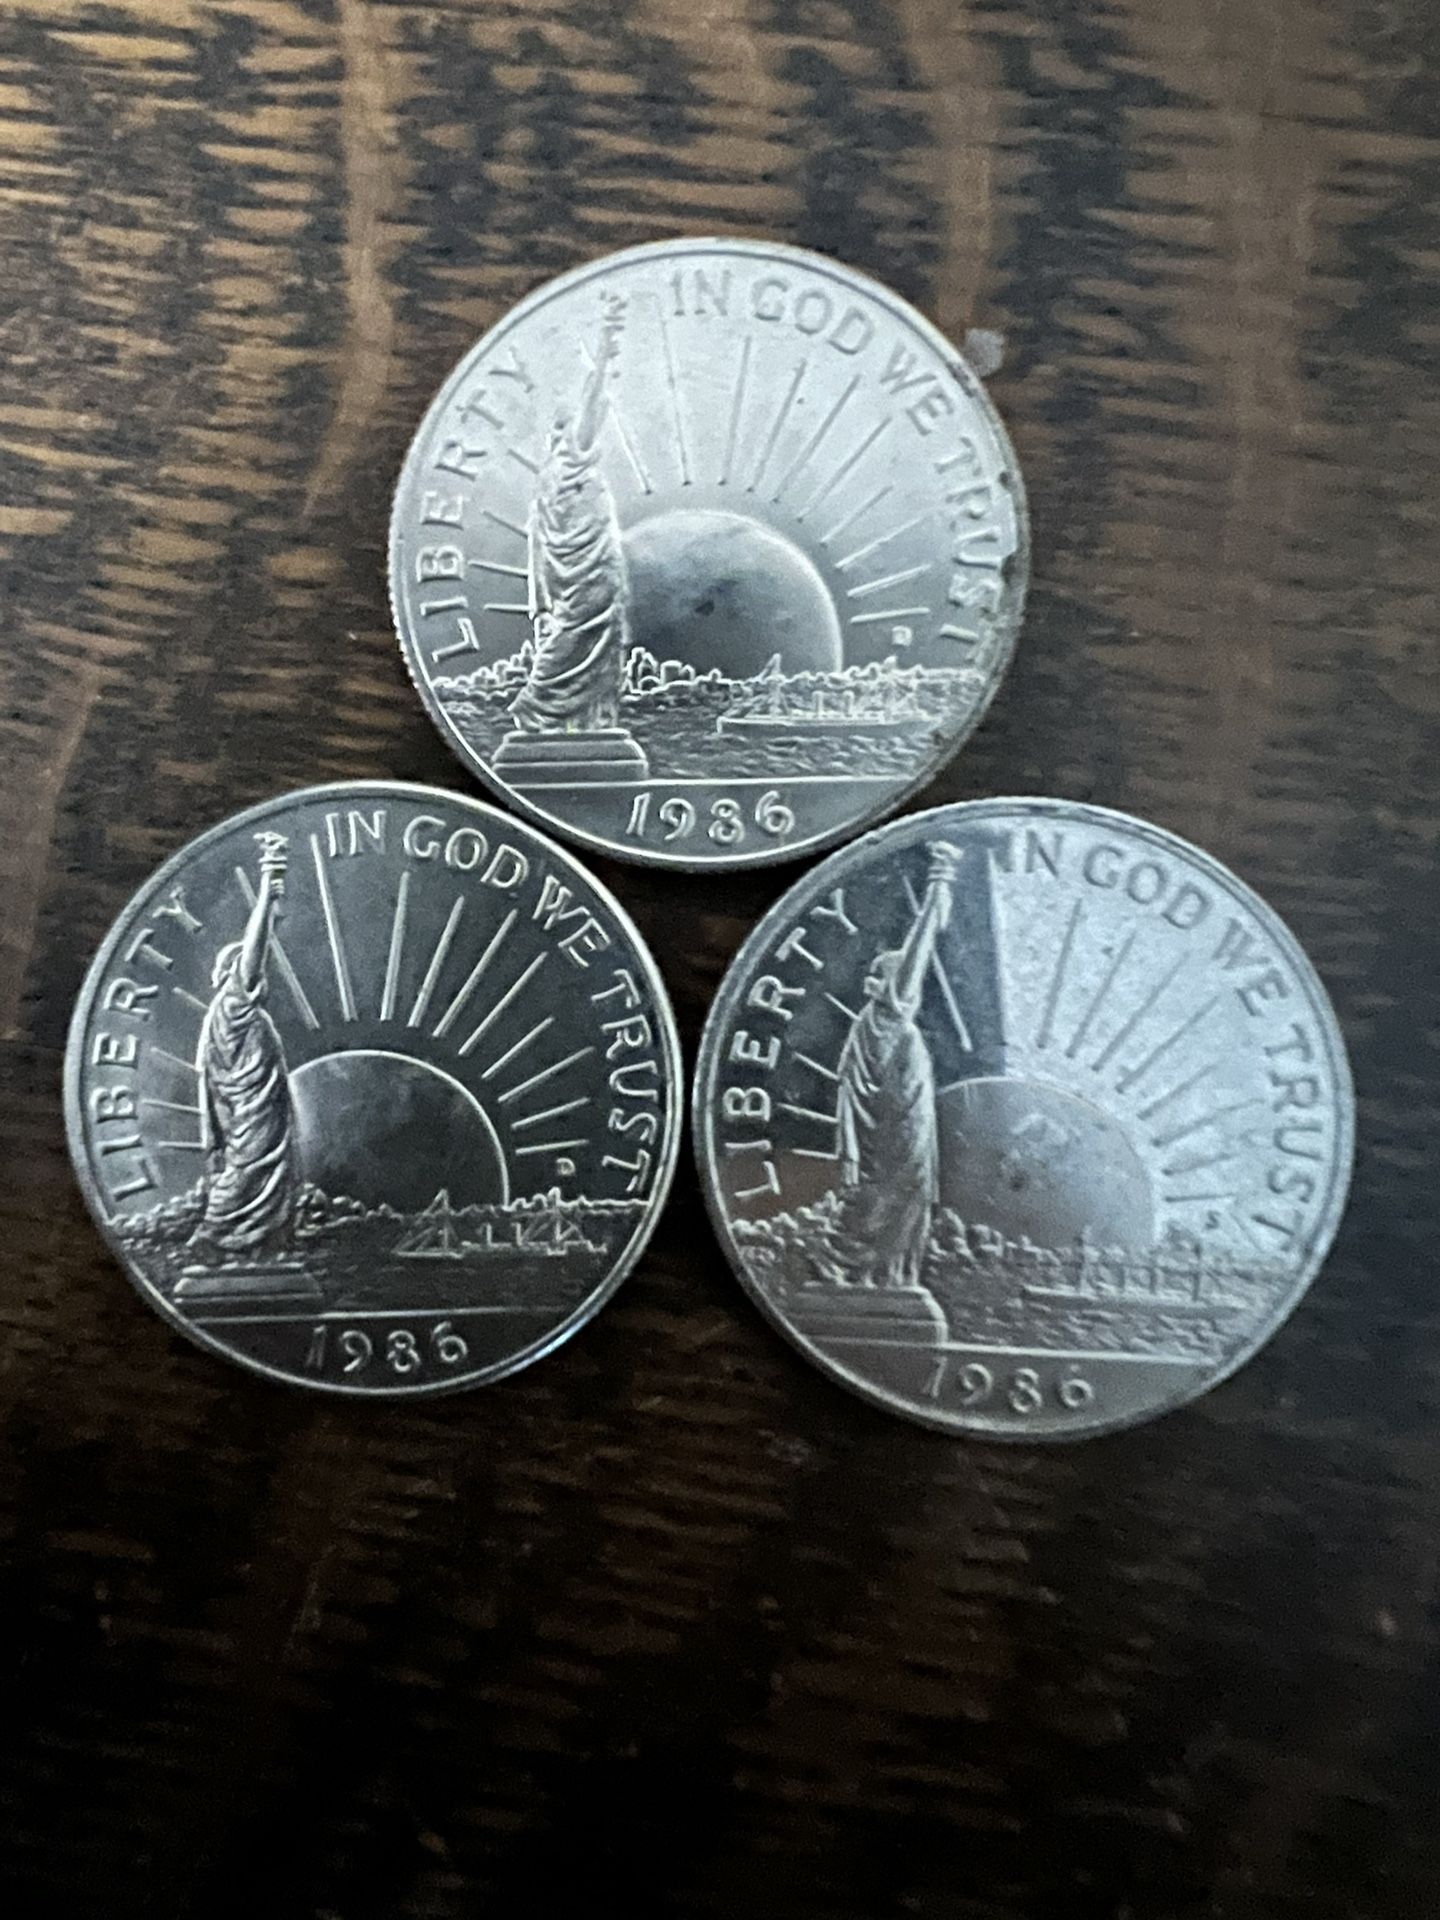 1986 Liberty Half Dollar Commemorative Coins